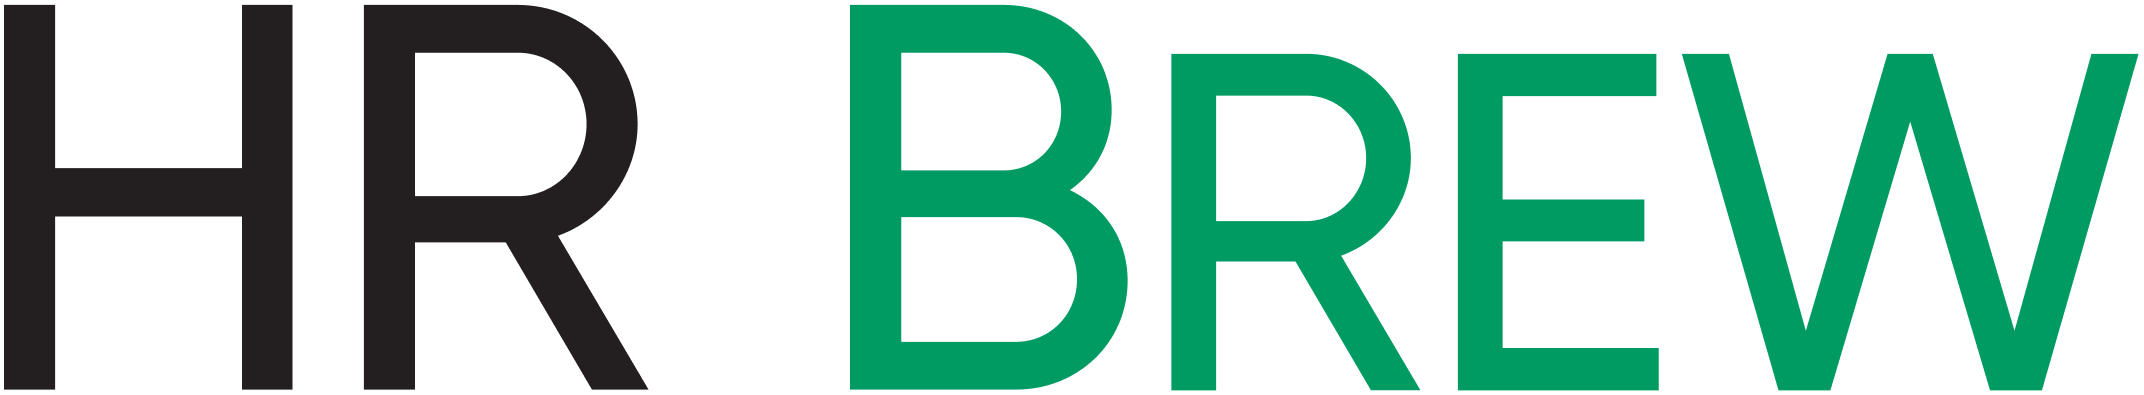 HR Brew logo